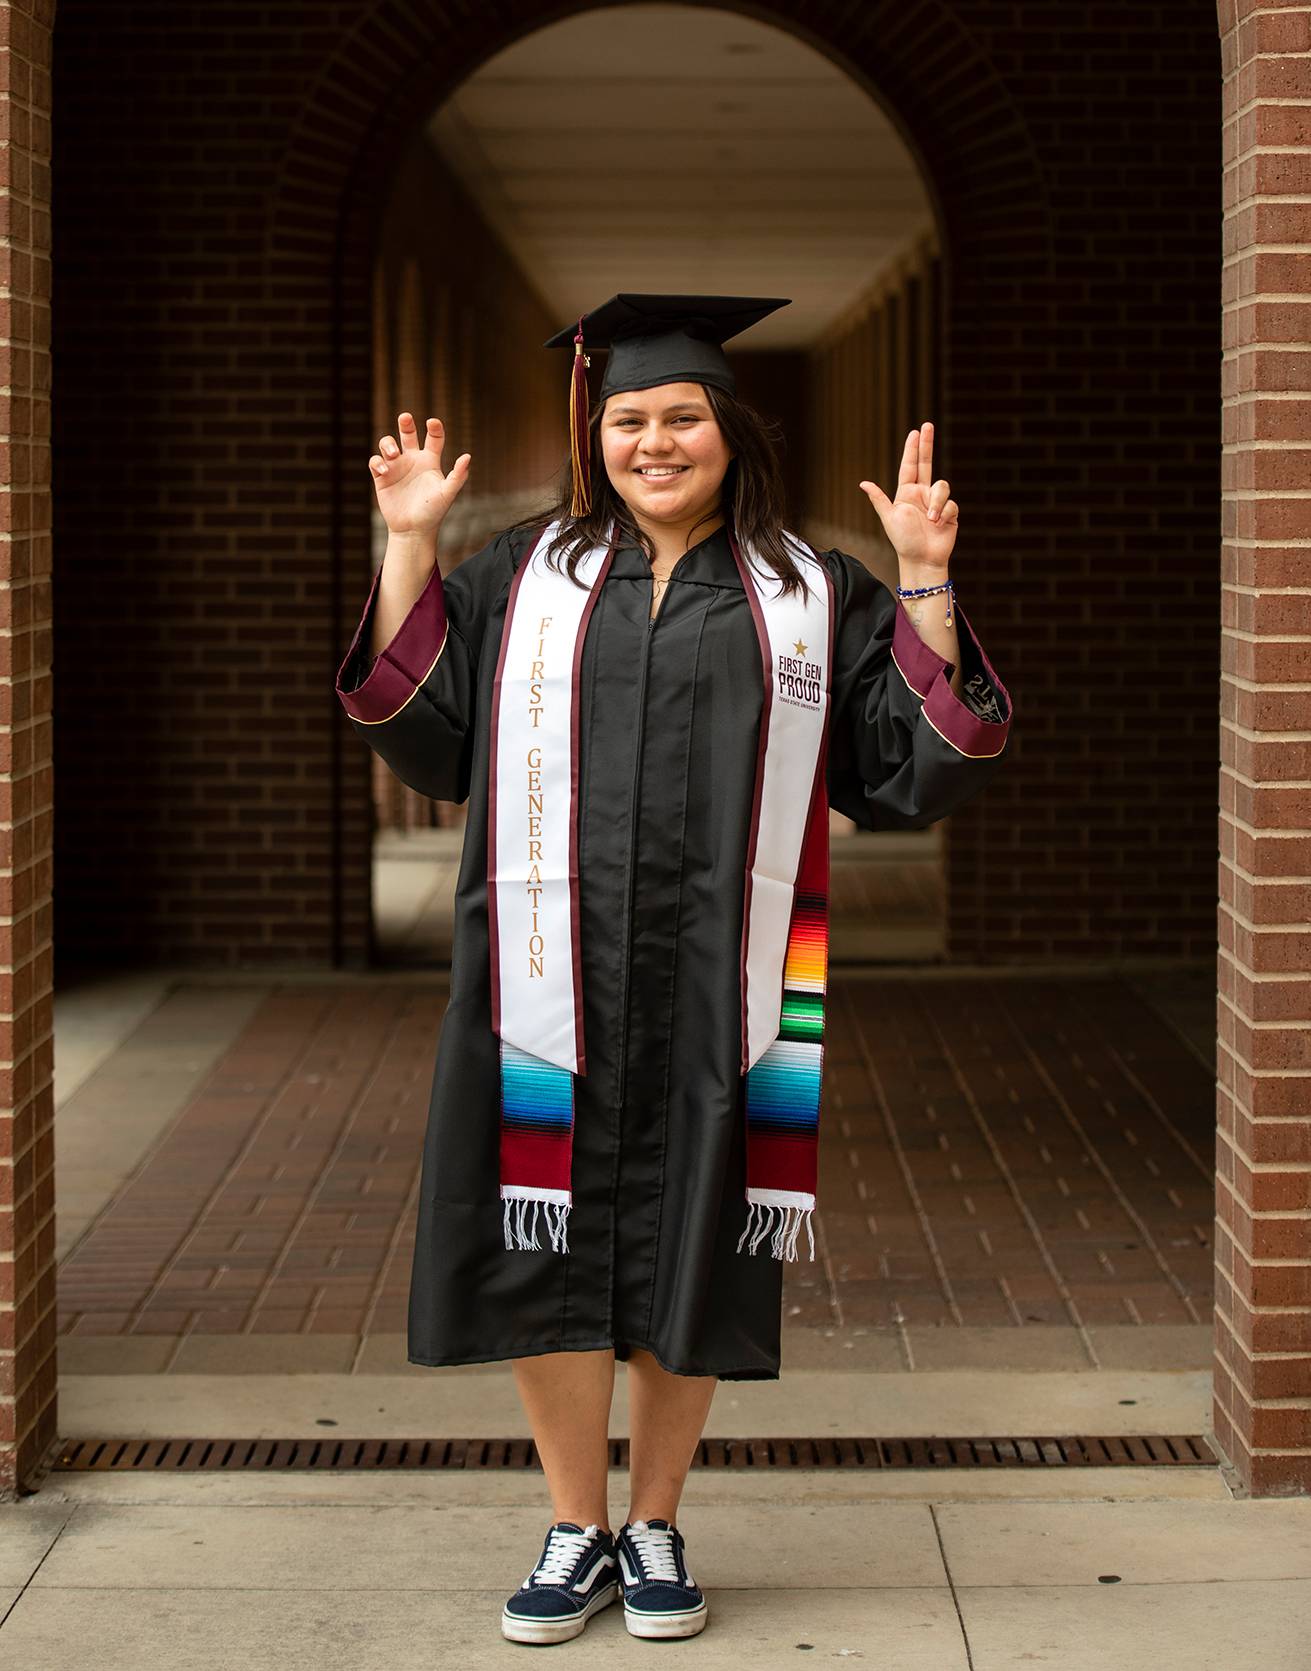 latina woman wearing graduation gown